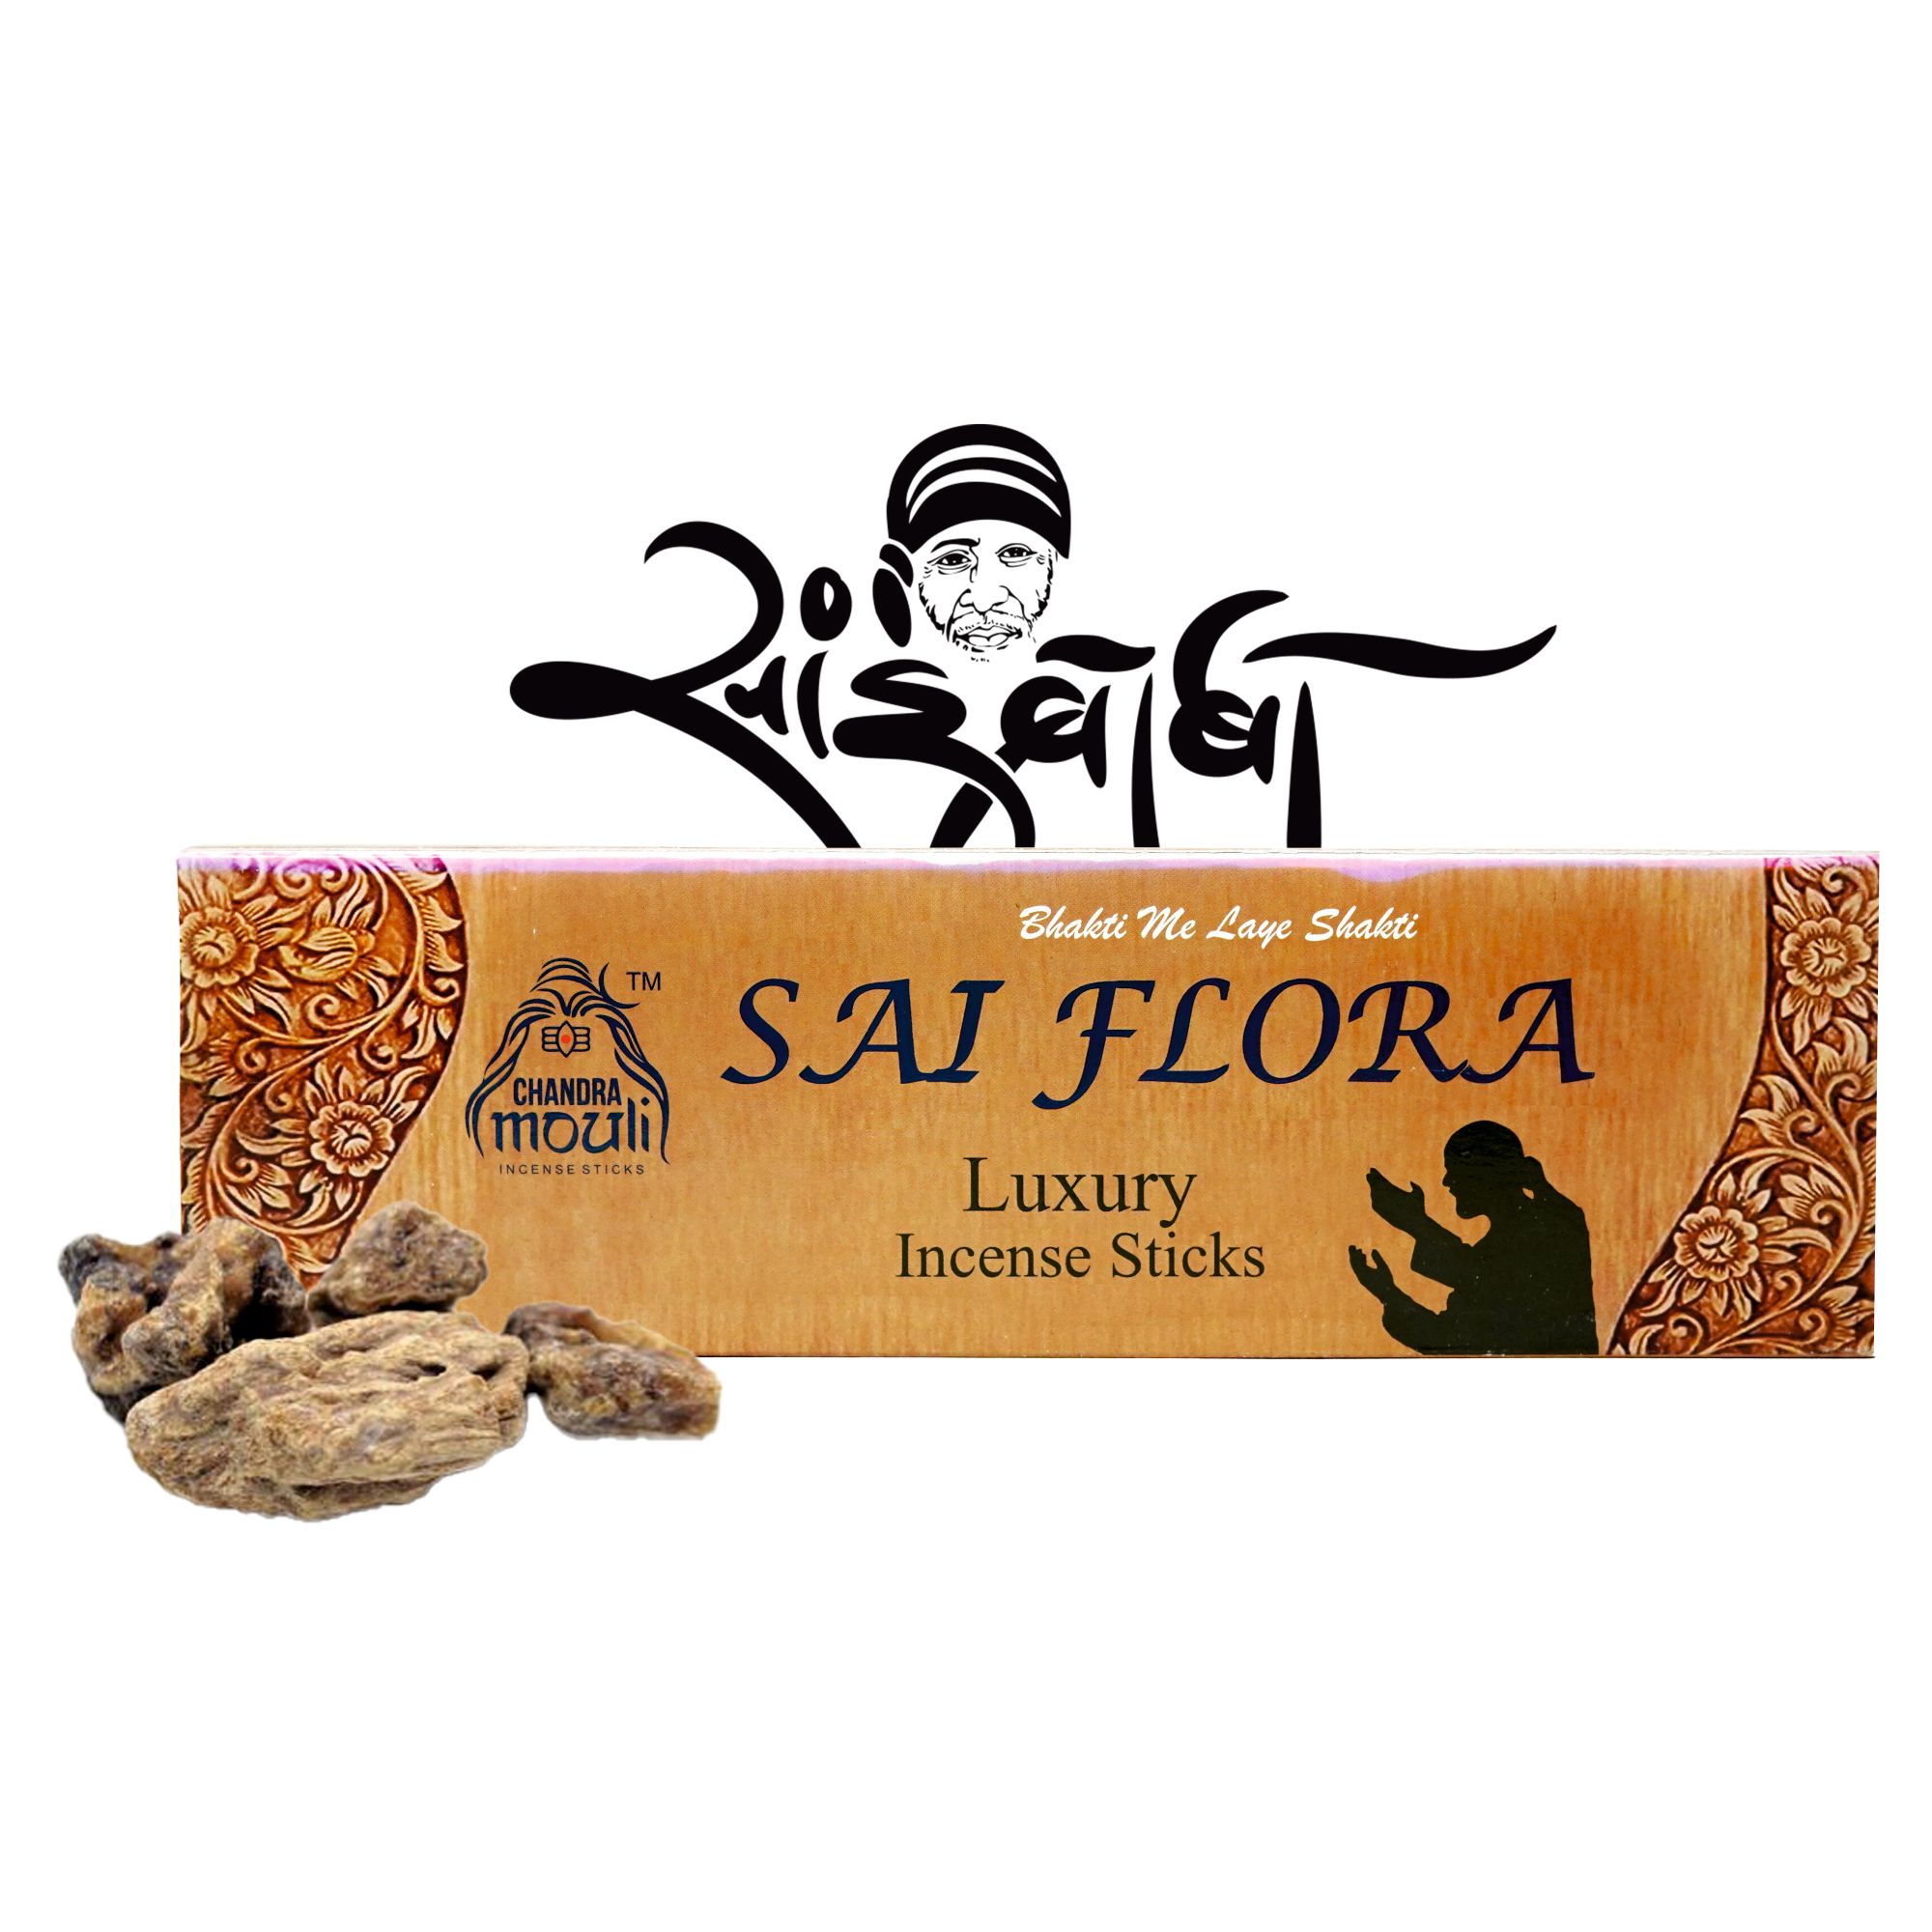 Tribes India Sai Flora Premium Incense Stick - Agarbatti For Puja, Meditation & Festival